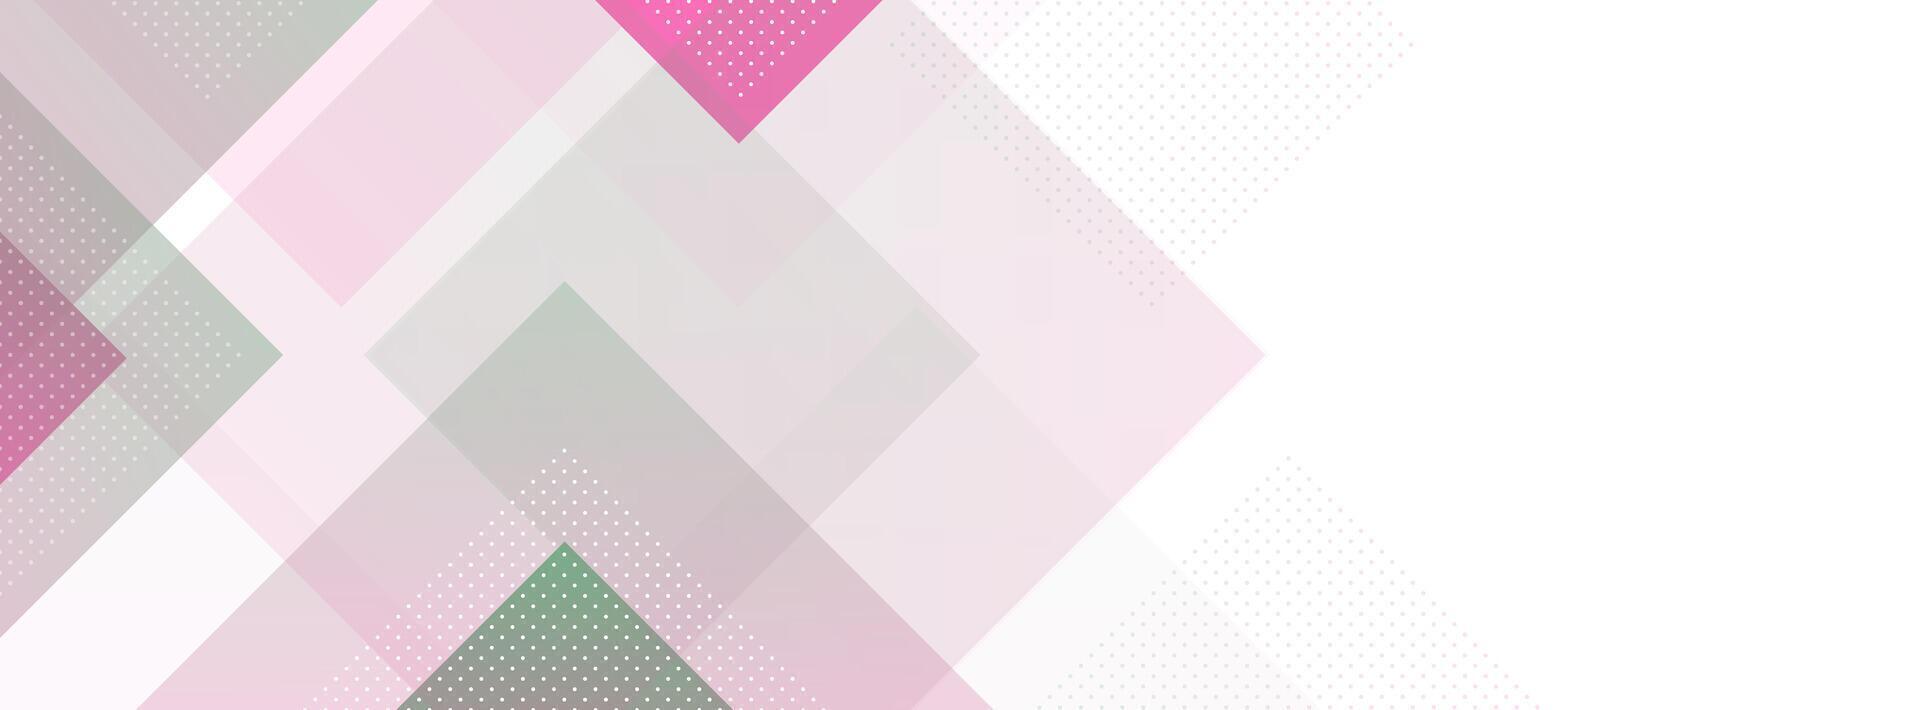 Geometric banner backgorund template, transparent, pink and green gradient, memphis vector